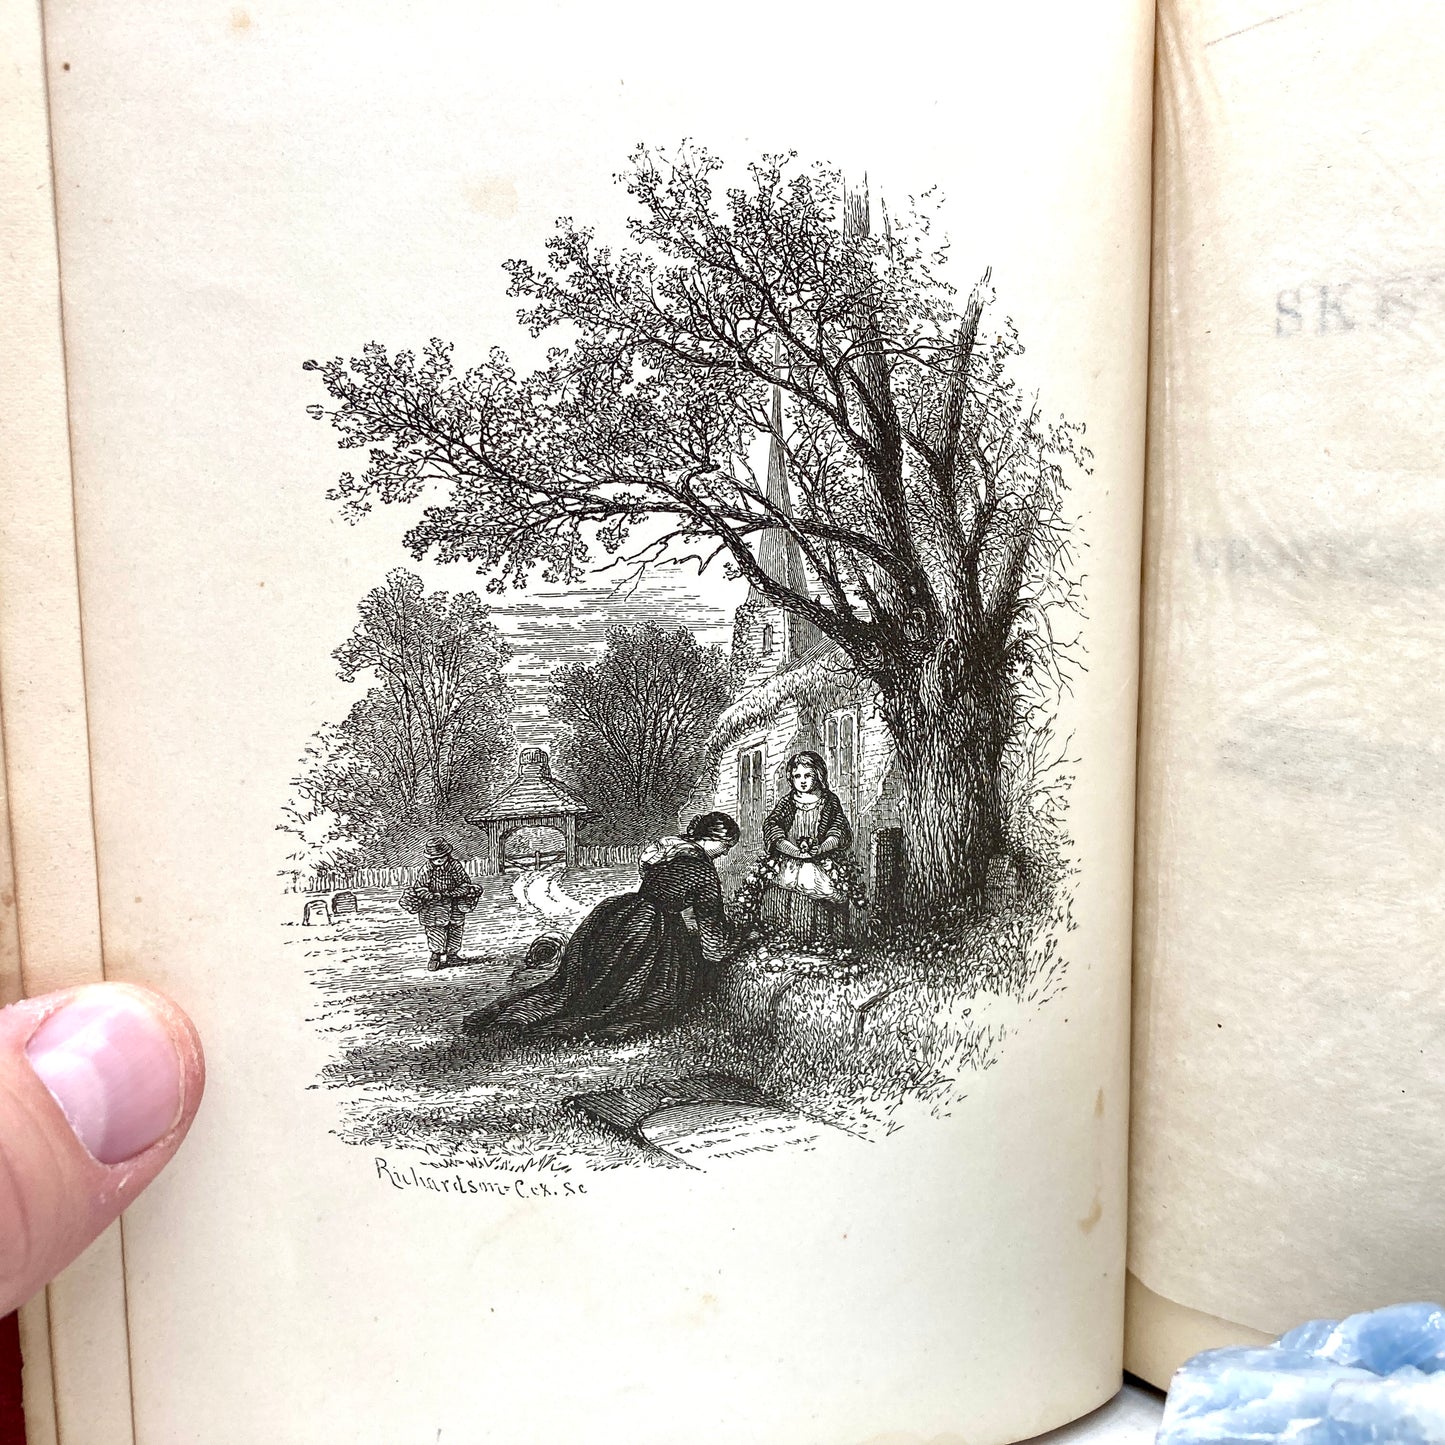 IRVING, Washington "The Sketch-Book of Geoffrey Crayon, Gent" [GP Putnam, 1882]